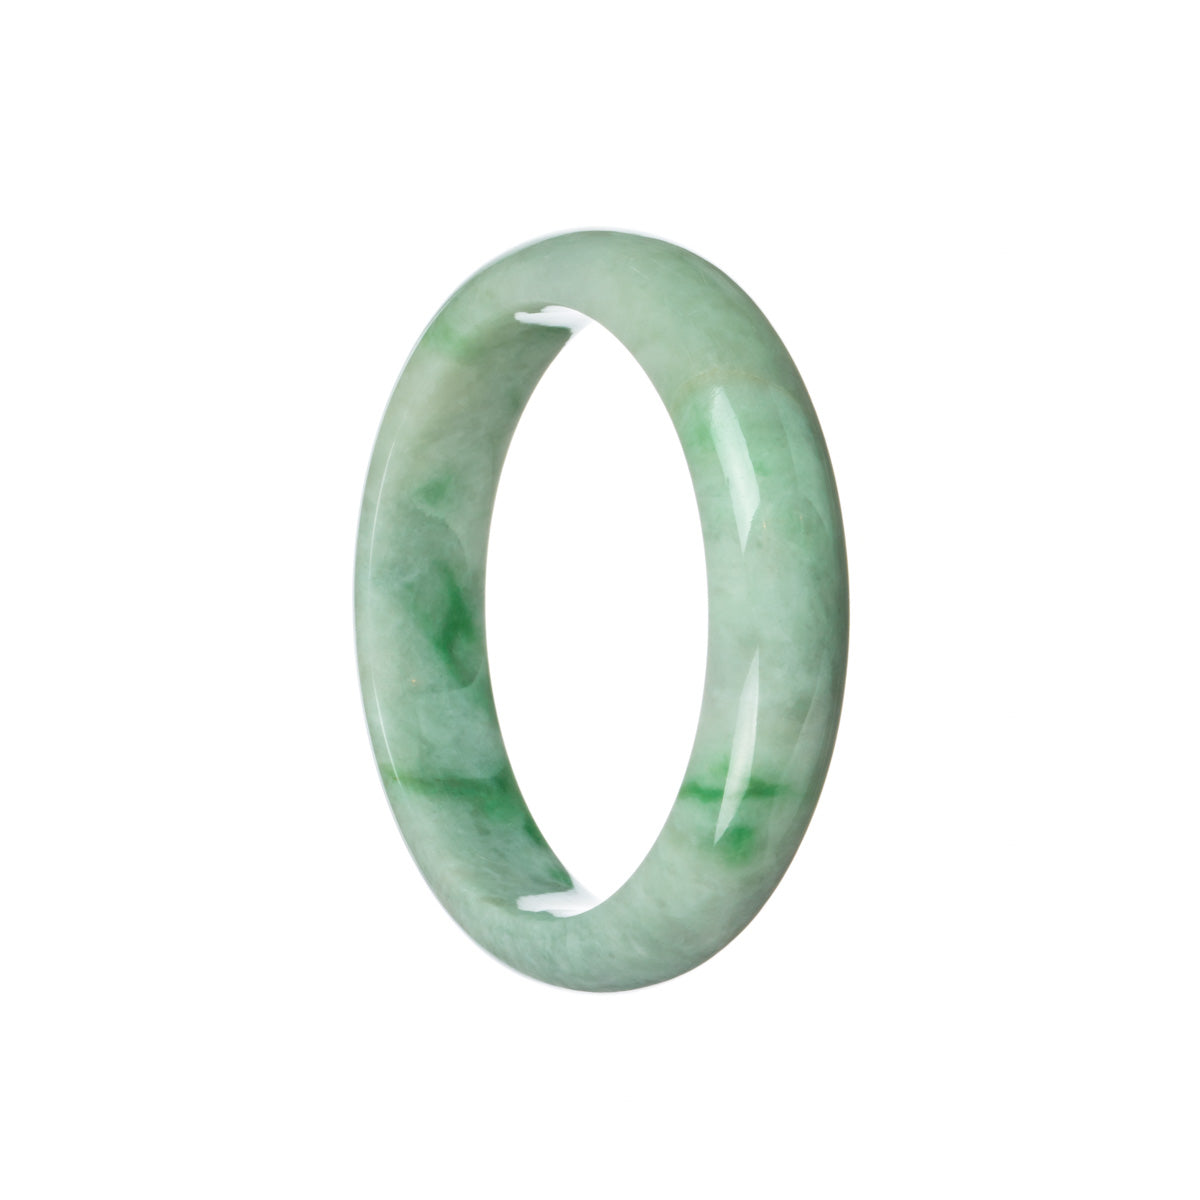 Genuine Grade A White with emerald green Jade Bangle Bracelet - 57mm Half Moon